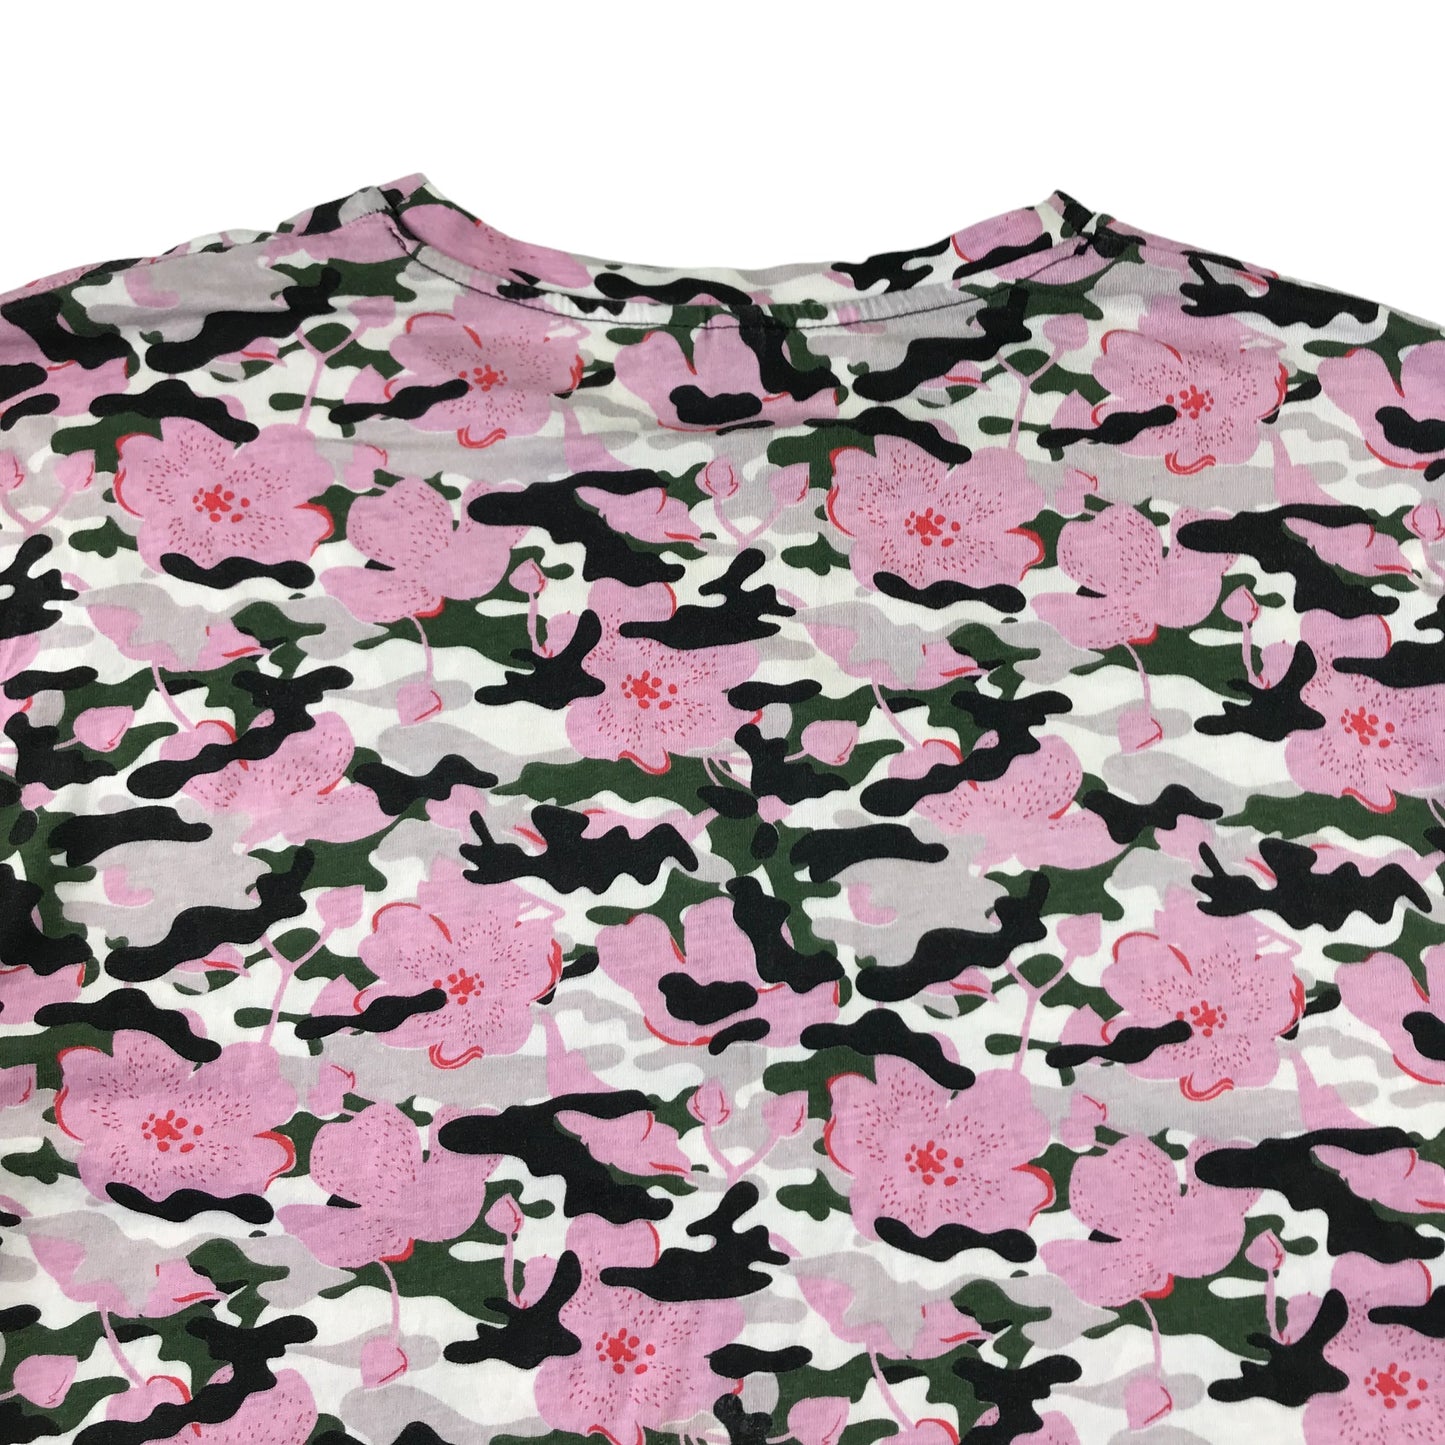 ASOS T-shirt size 12 women pink khaki floral camo pattern oversized Cotton